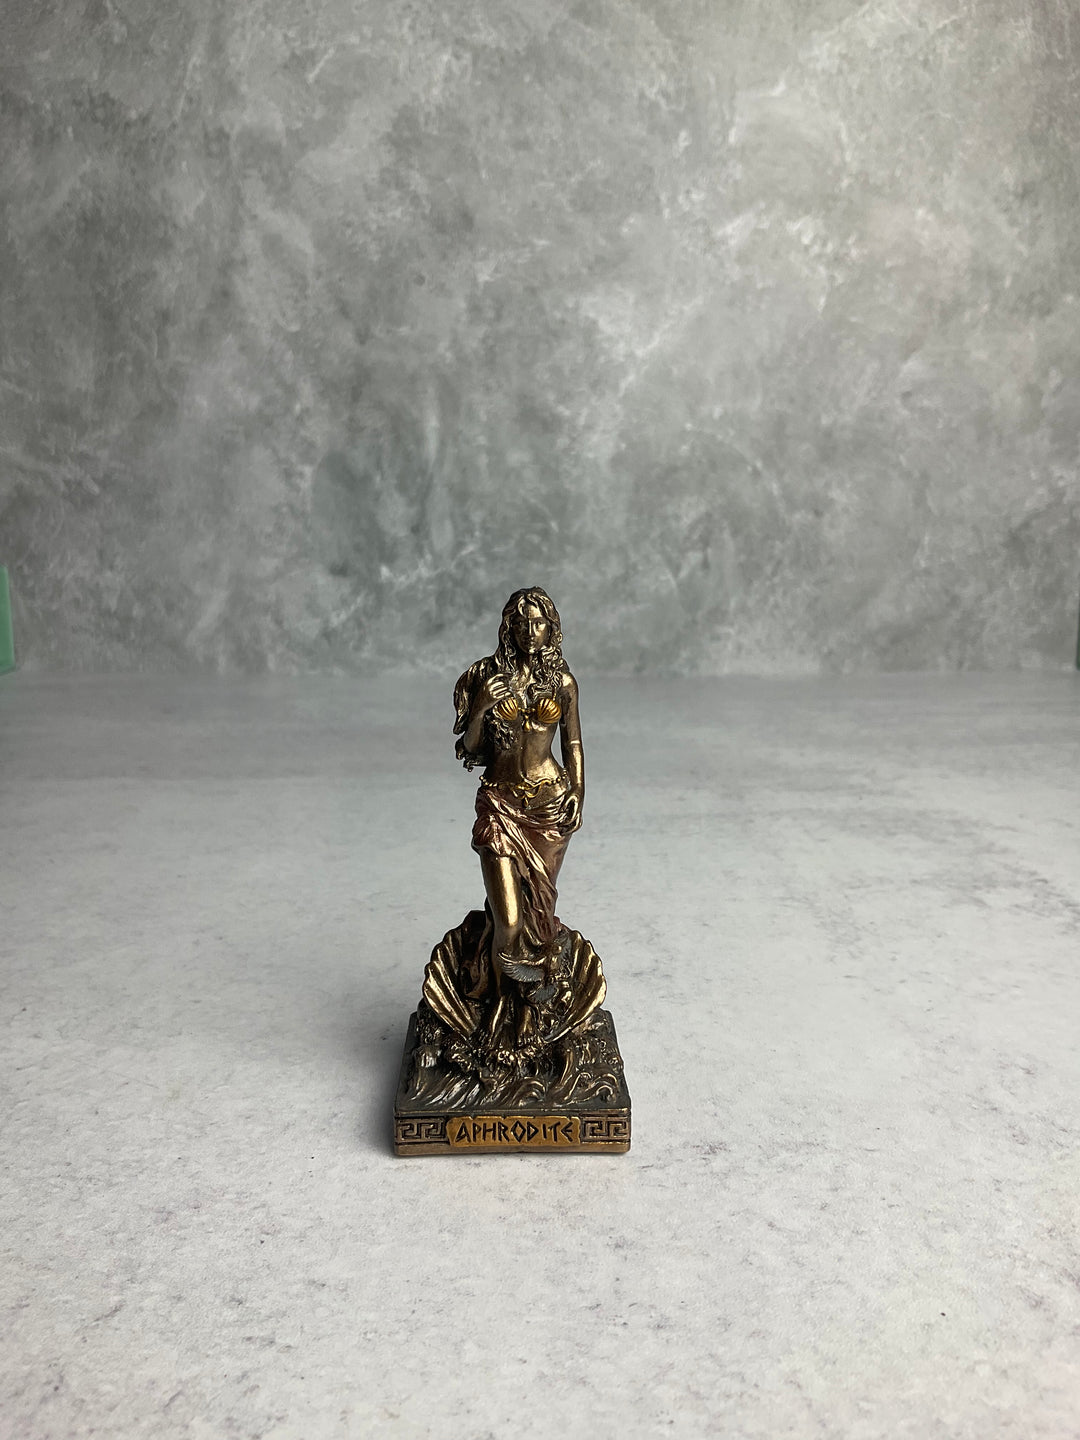 Aphrodite bronzed figure 3.5"